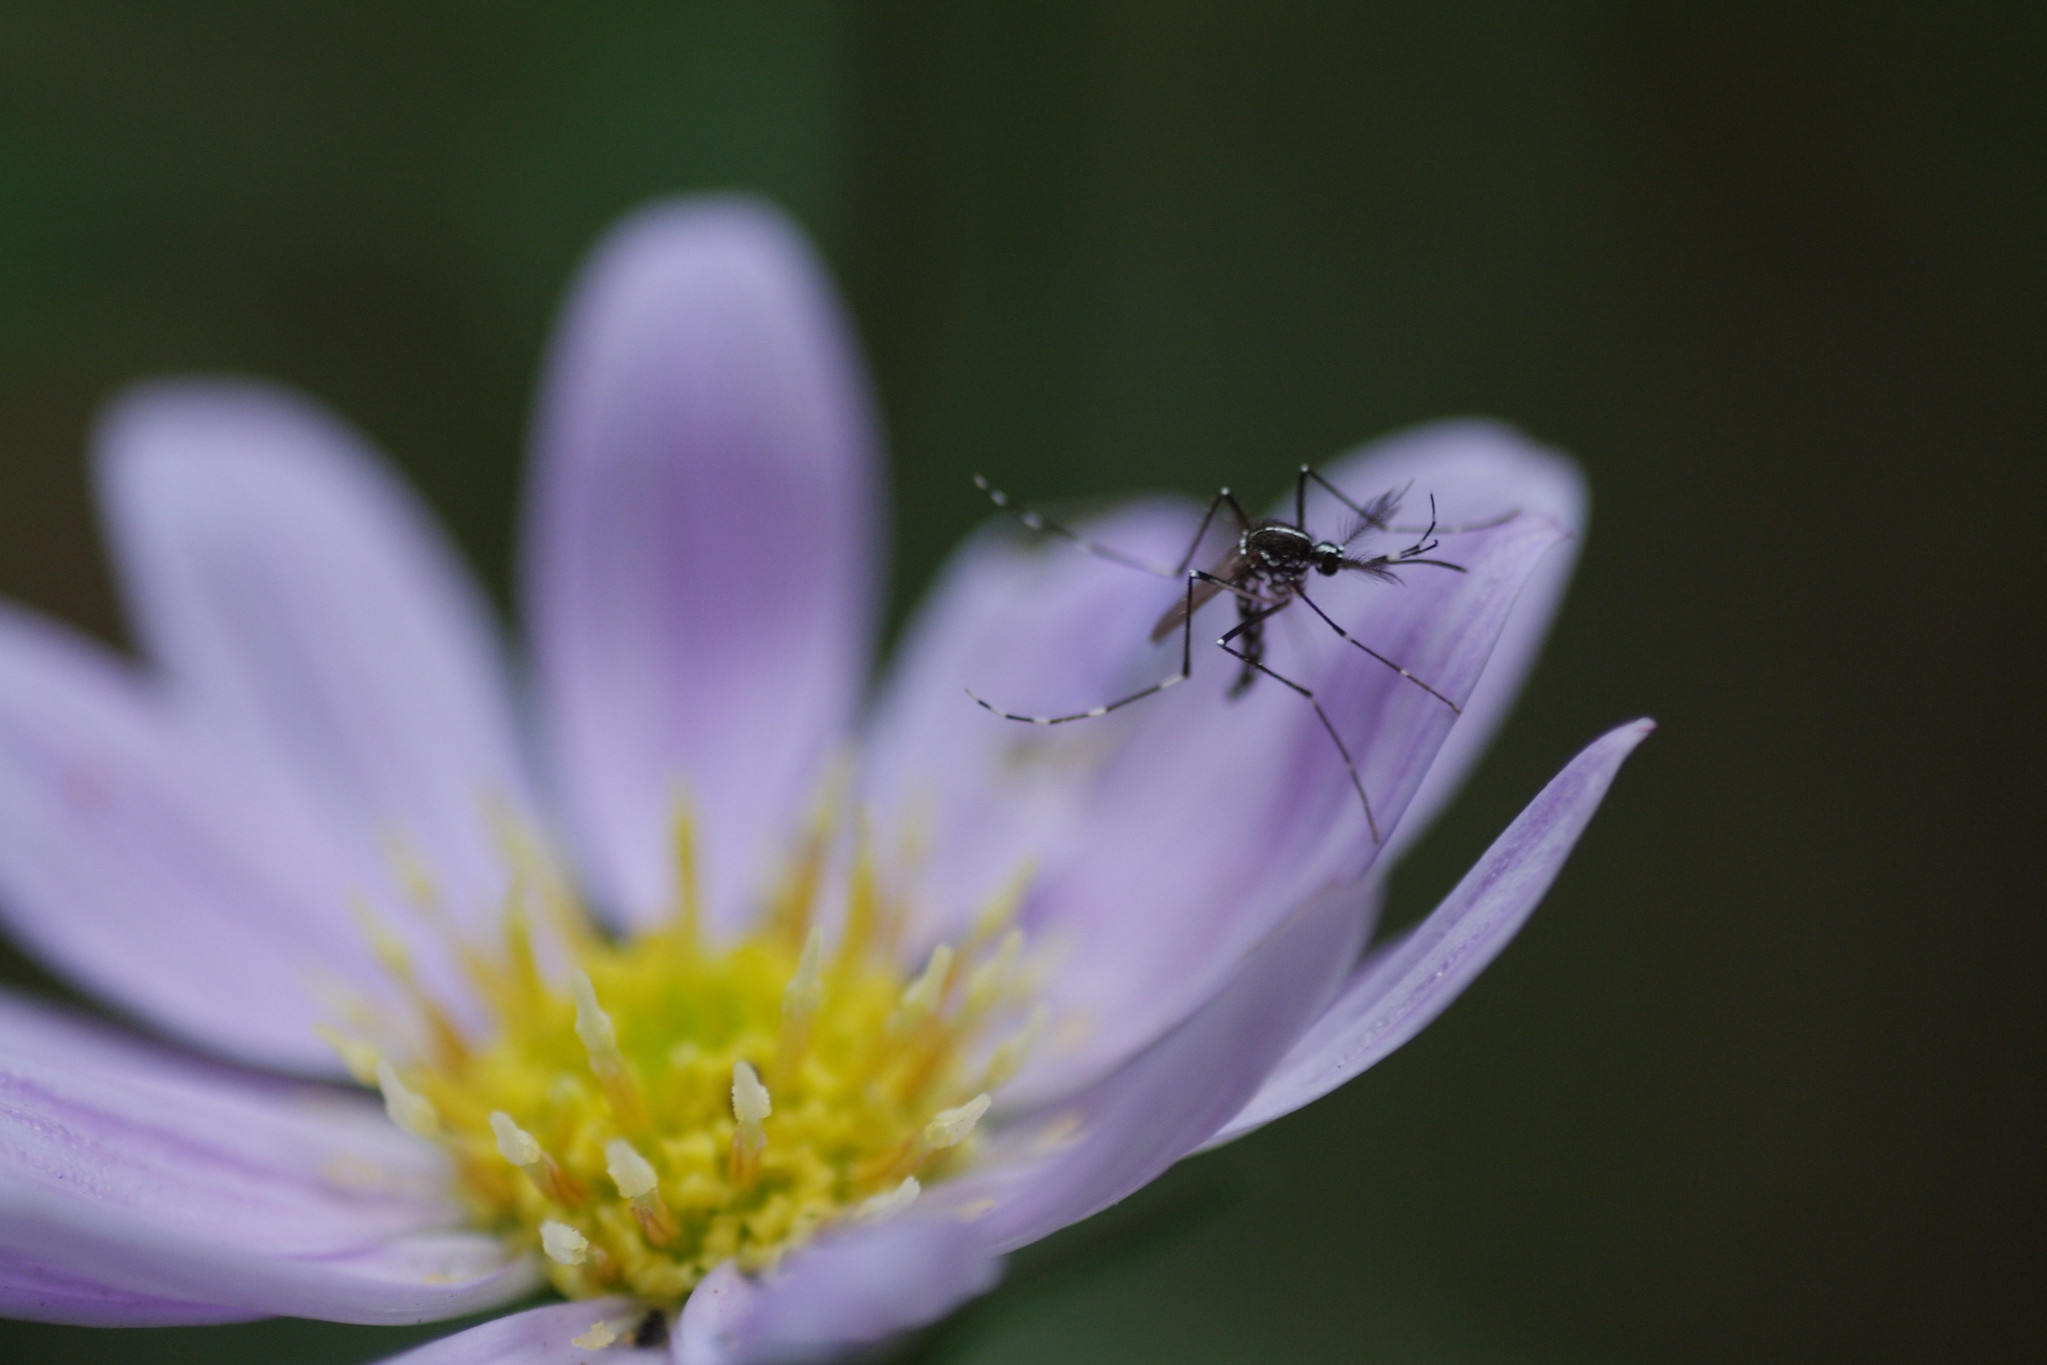 Mosquito on purple flower